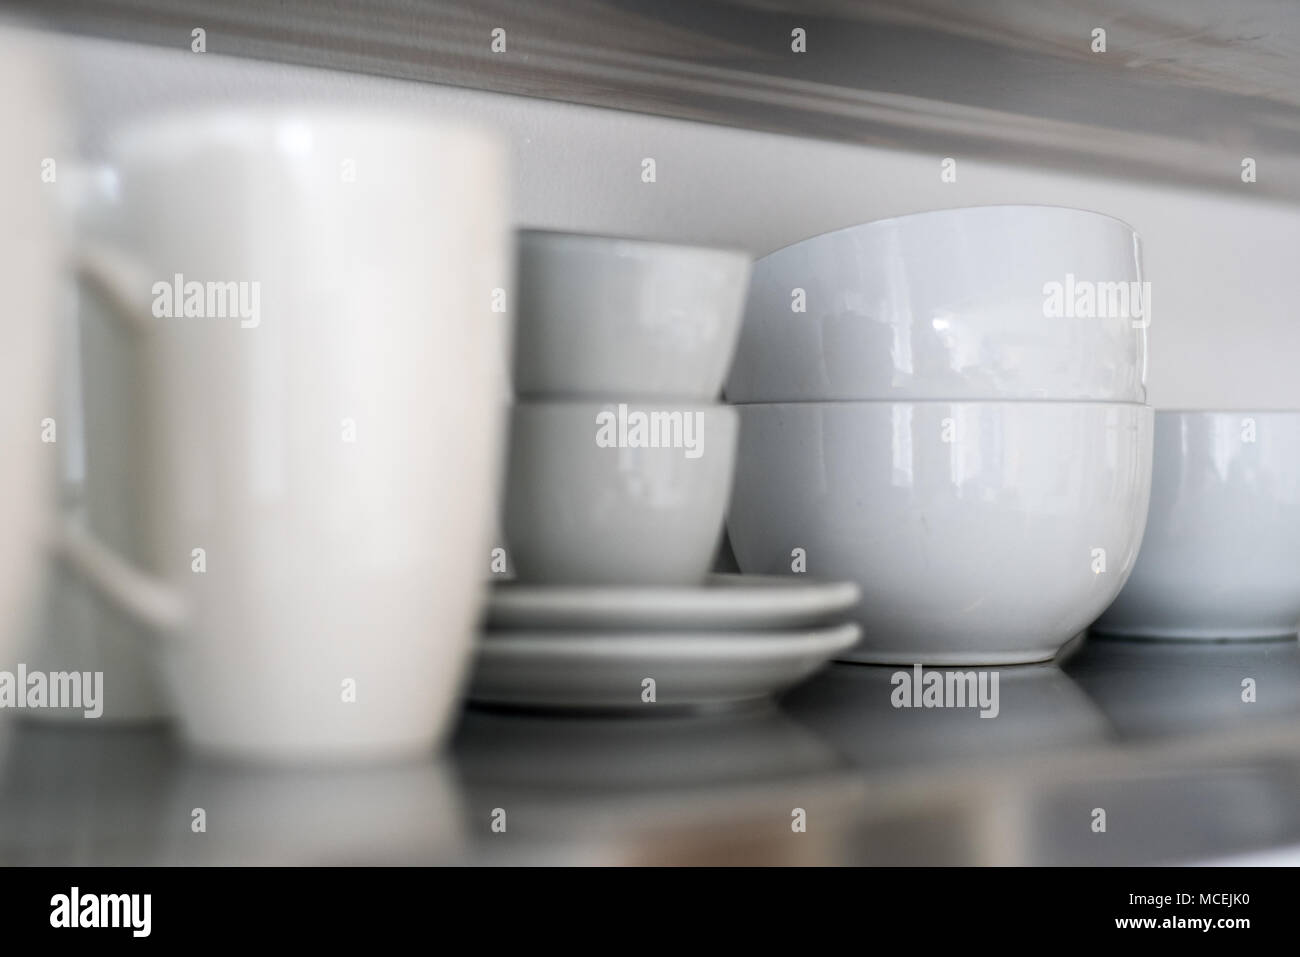 Ceramic bowls and mugs on kitchen shelf Stock Photo